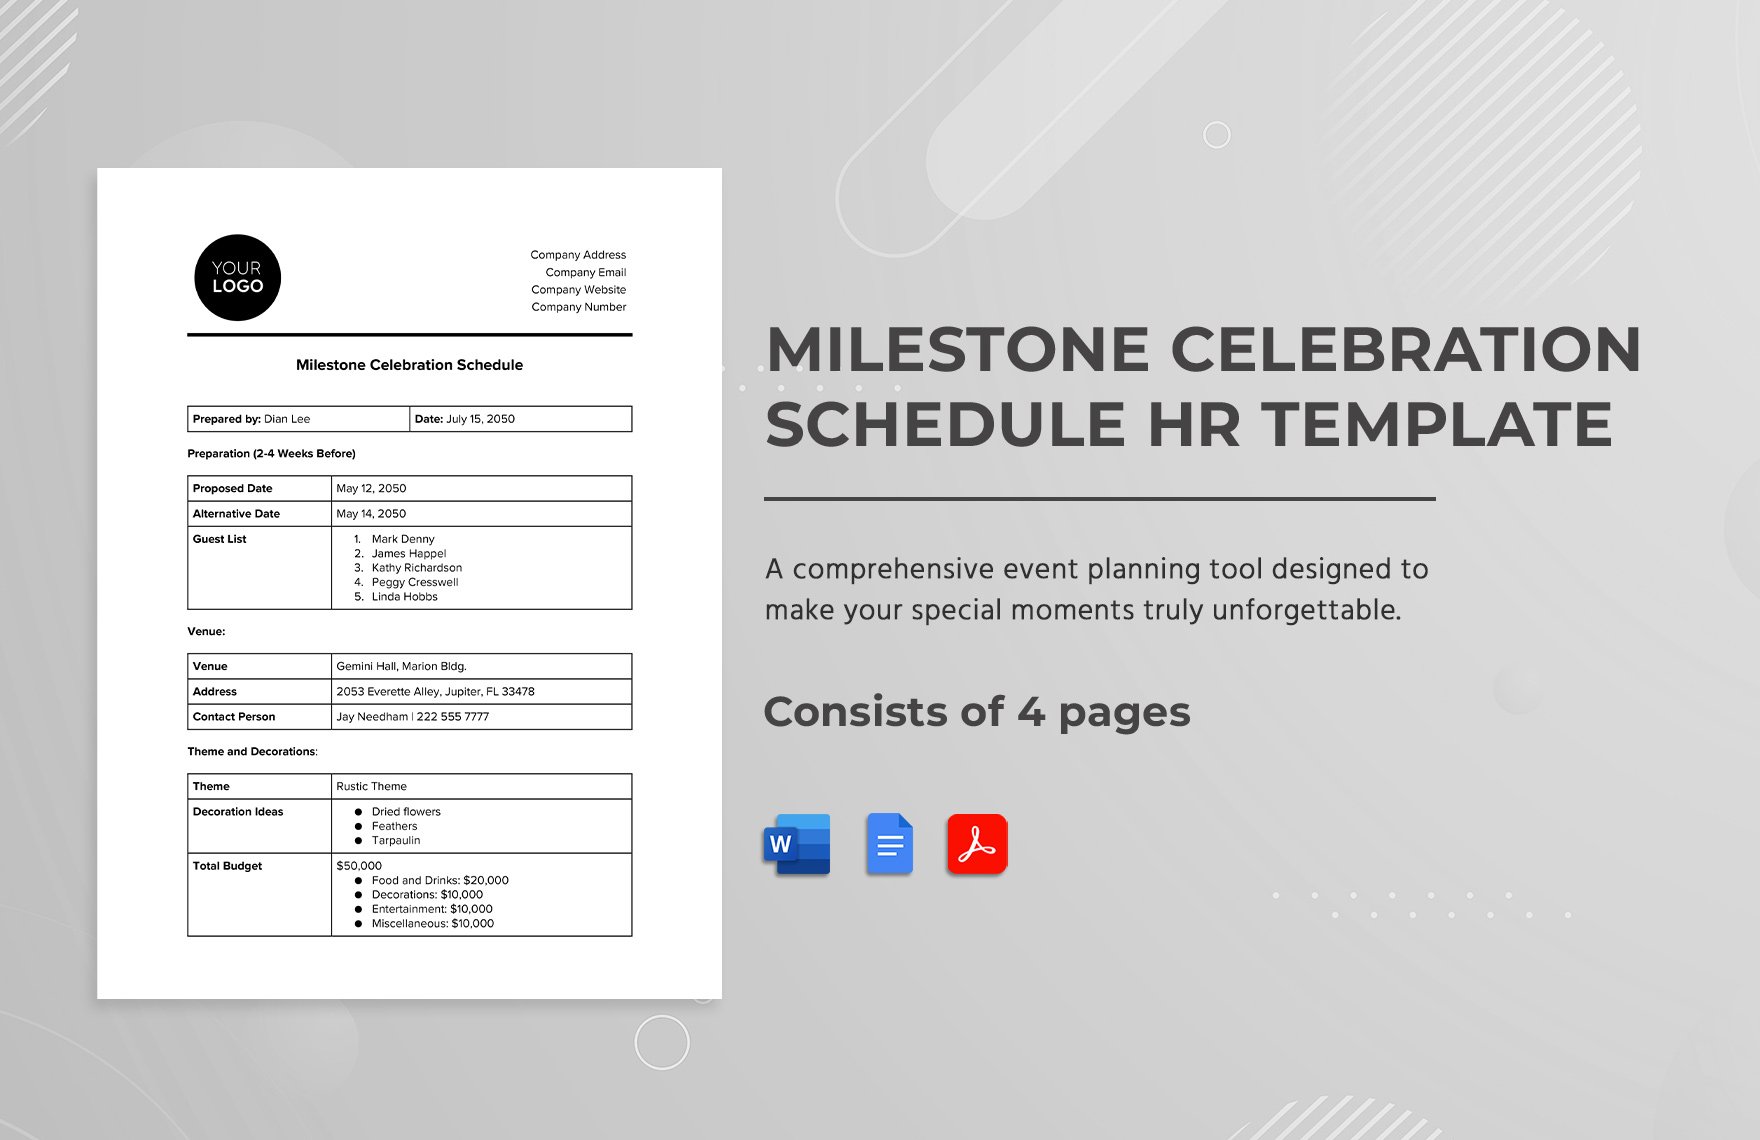 Milestone Celebration Schedule HR Template